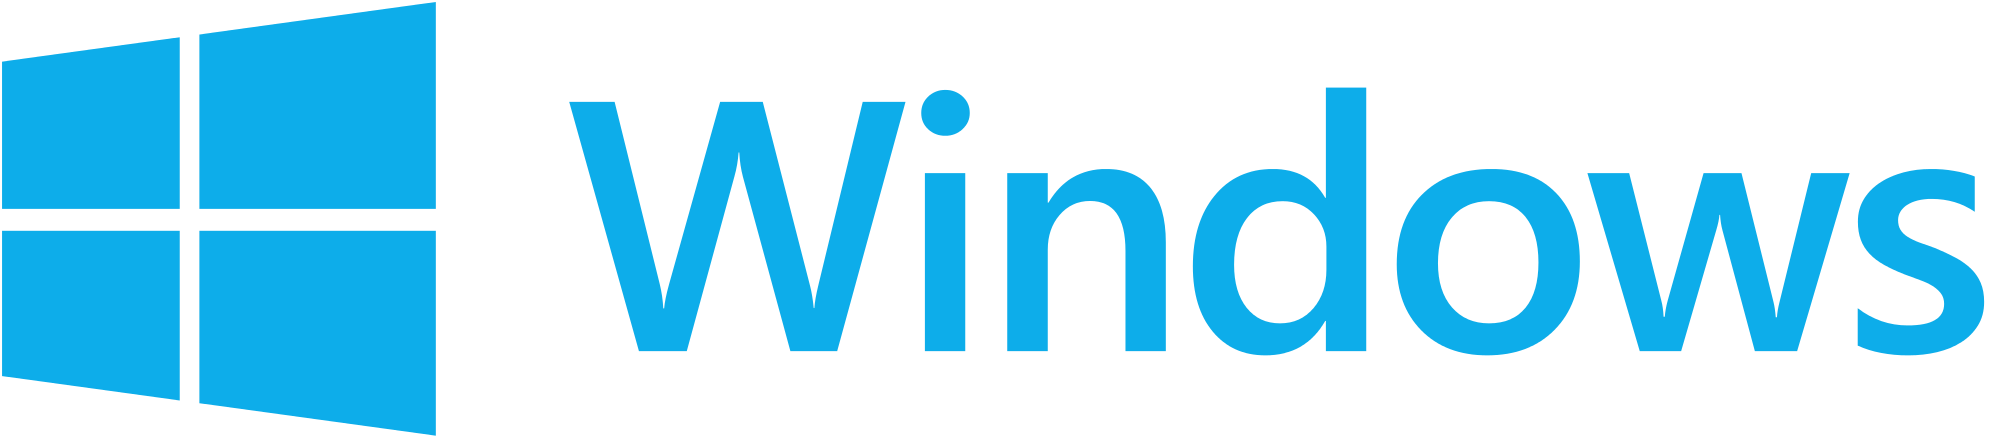 Windows Logo - Windows Logo and Name transparent PNG - StickPNG